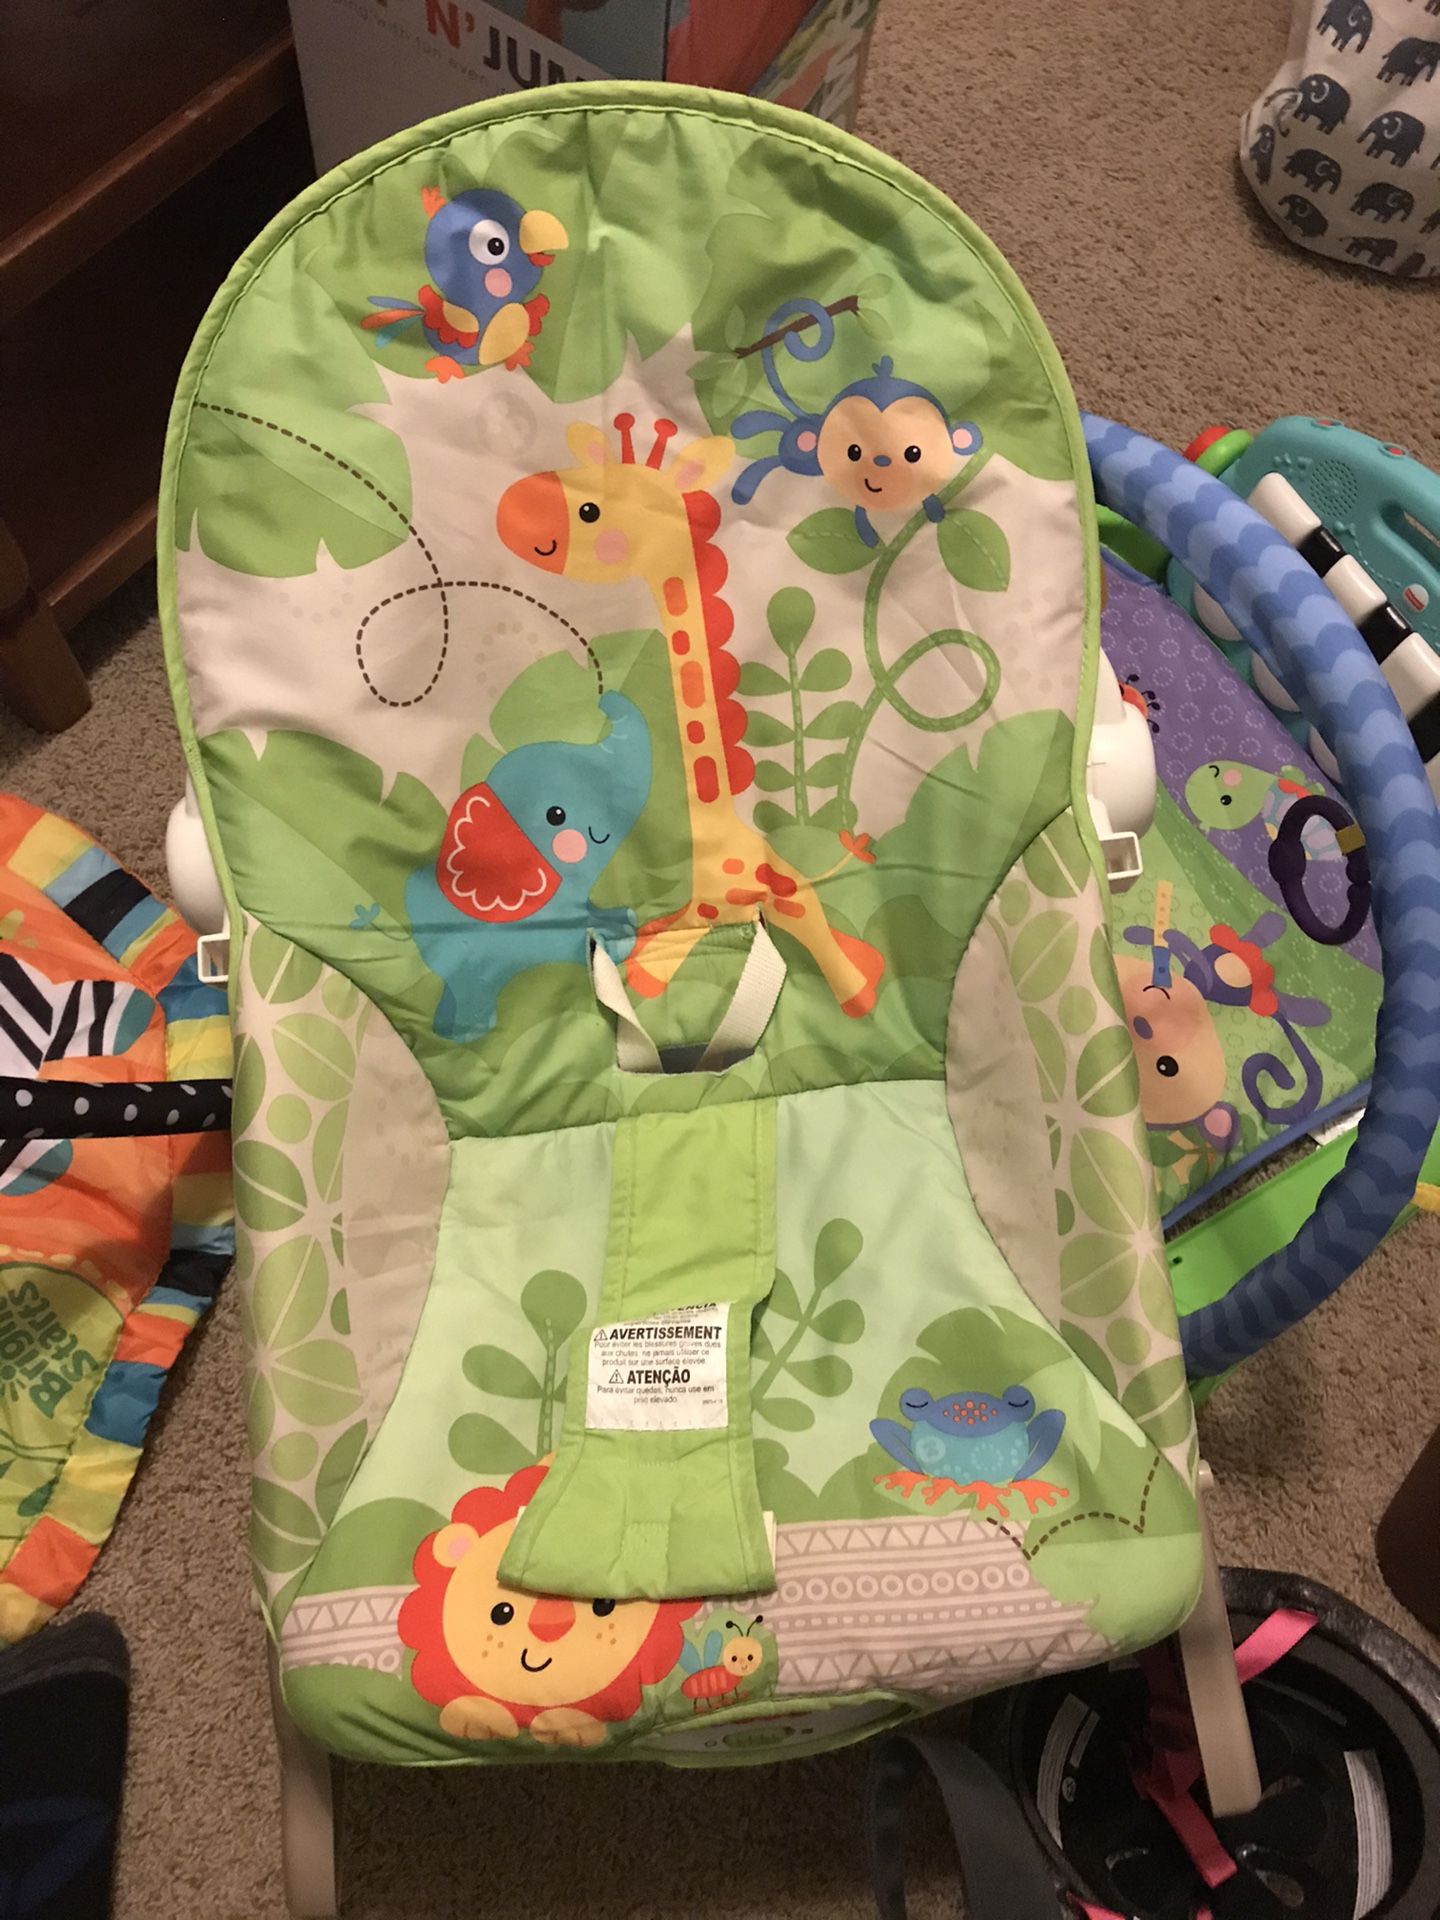 Baby play mats, boppys , fisher price rocker chair , Eddie Bauer diaper bag